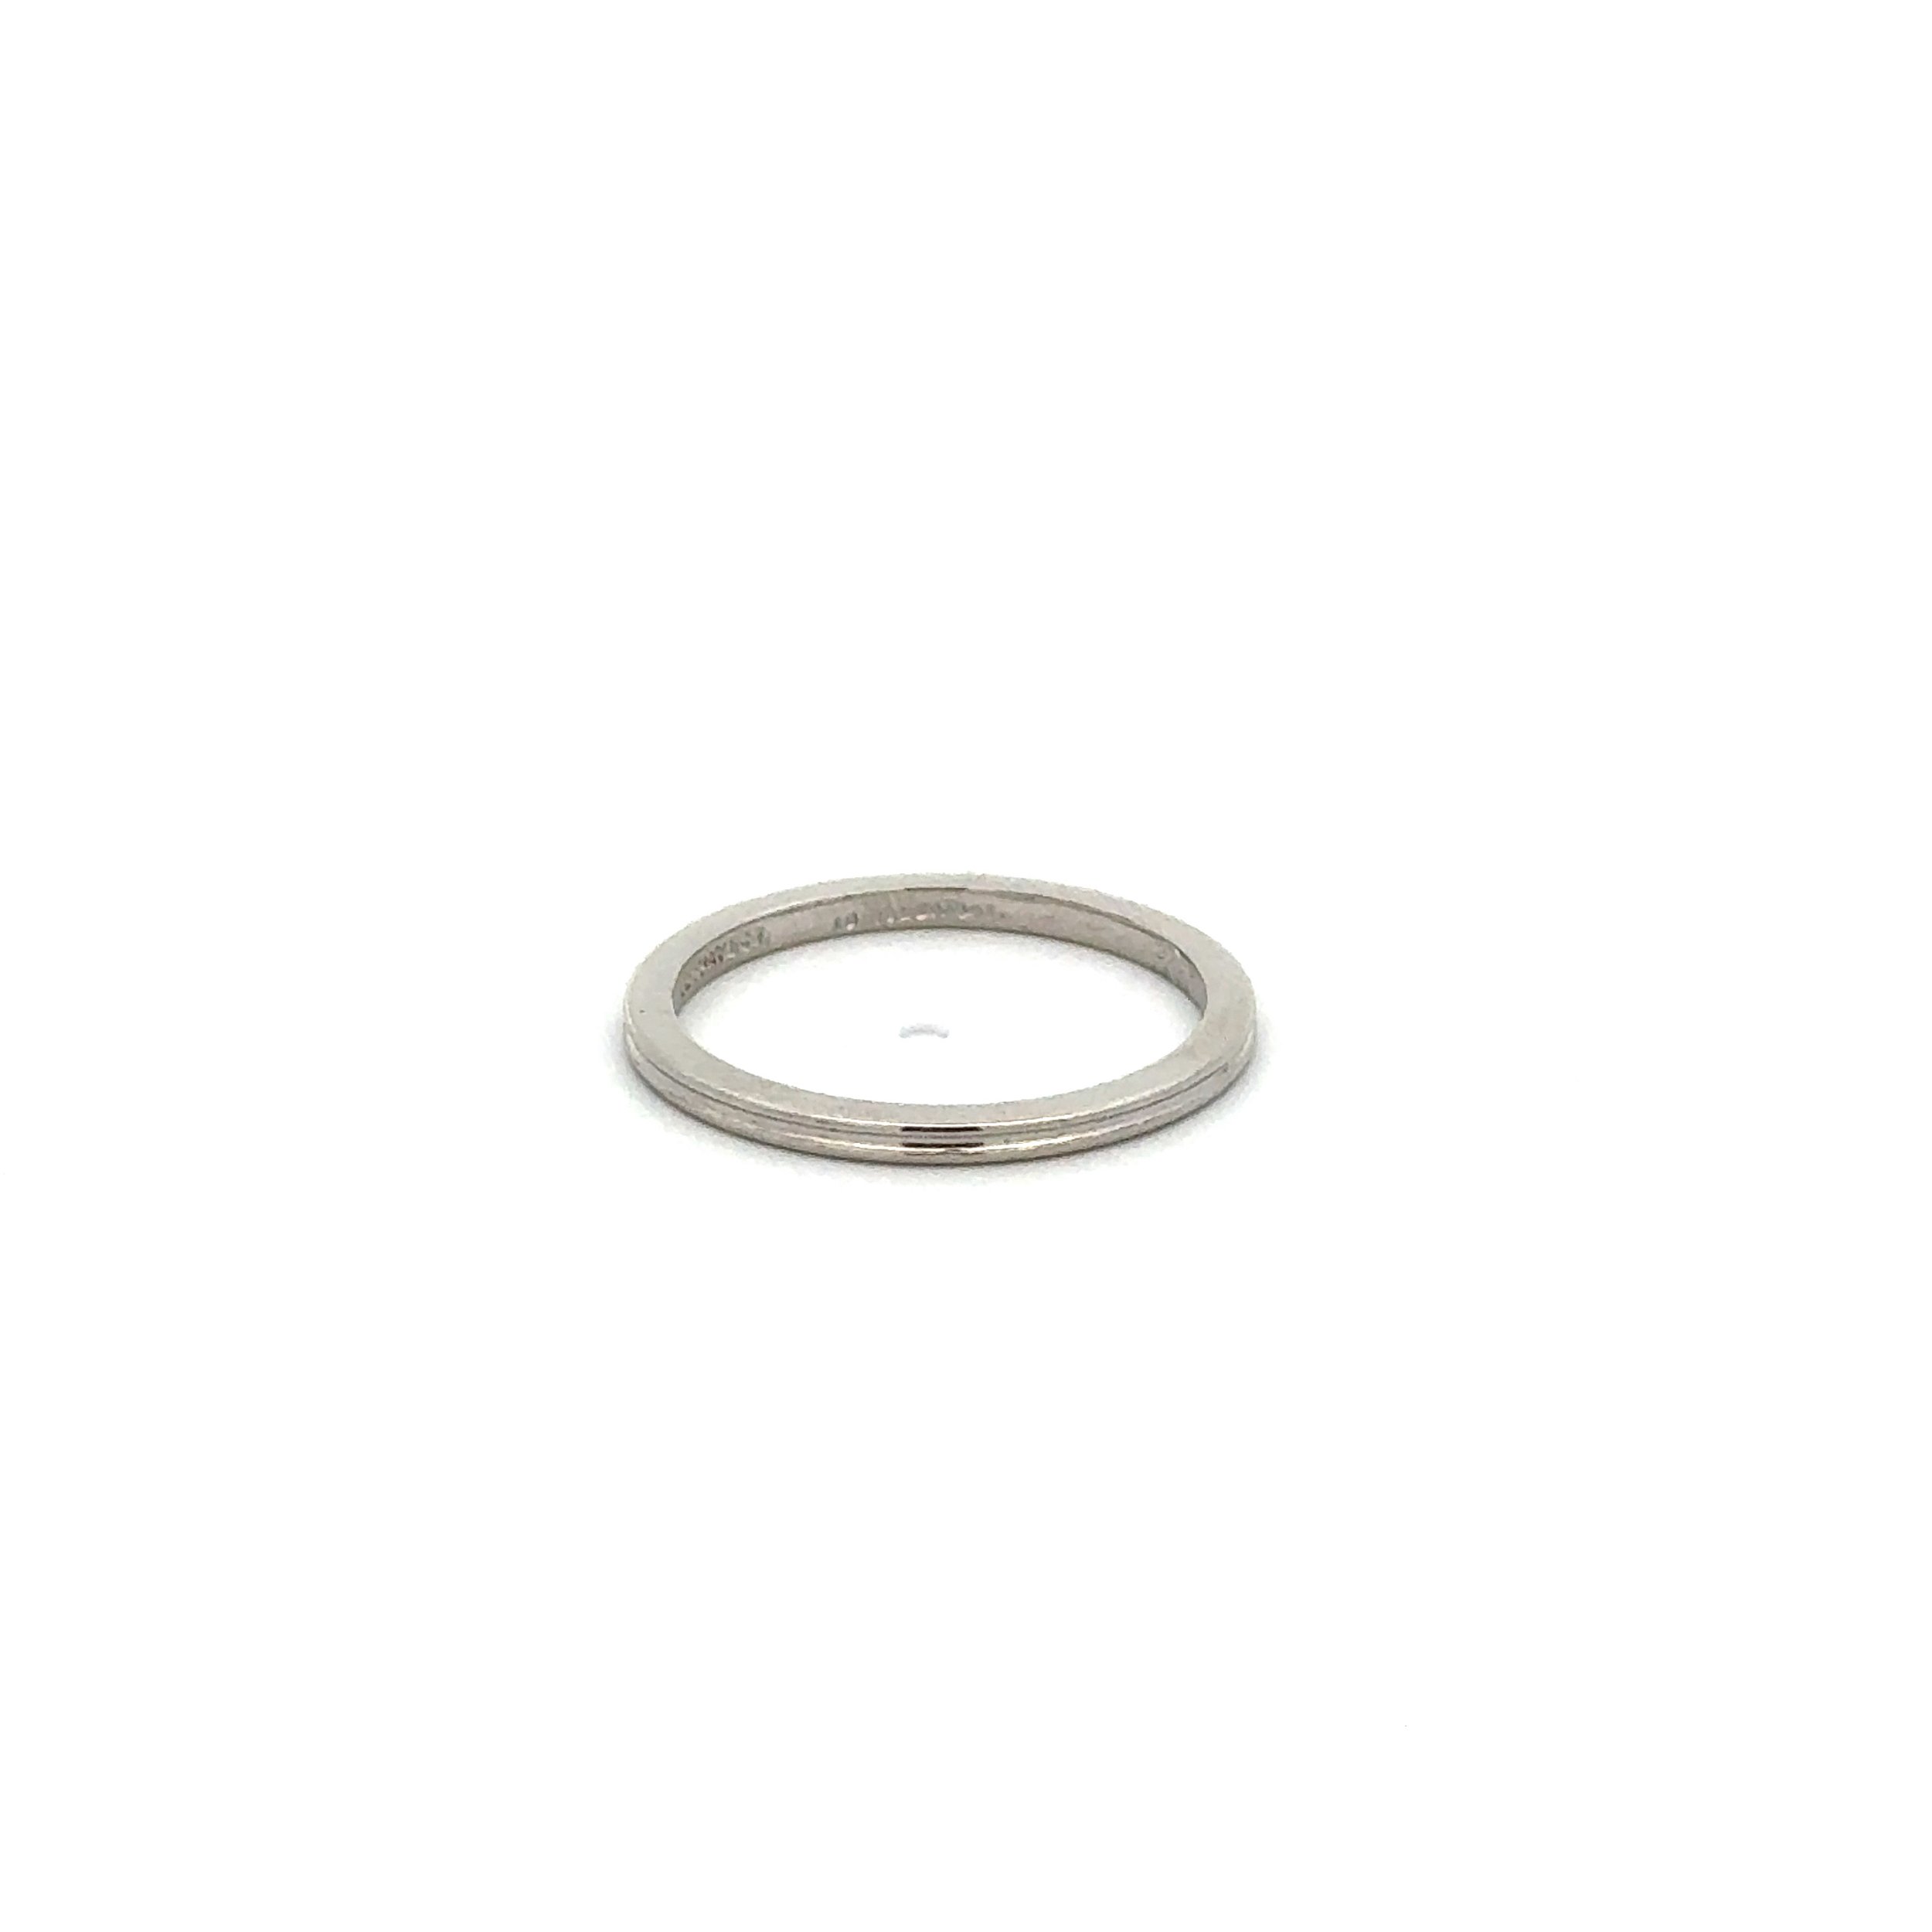 Platinum 1950's TIFFANY & CO Mid Century Double Row Plain Band Ring Engraved c1954, 2.4g, s5.25